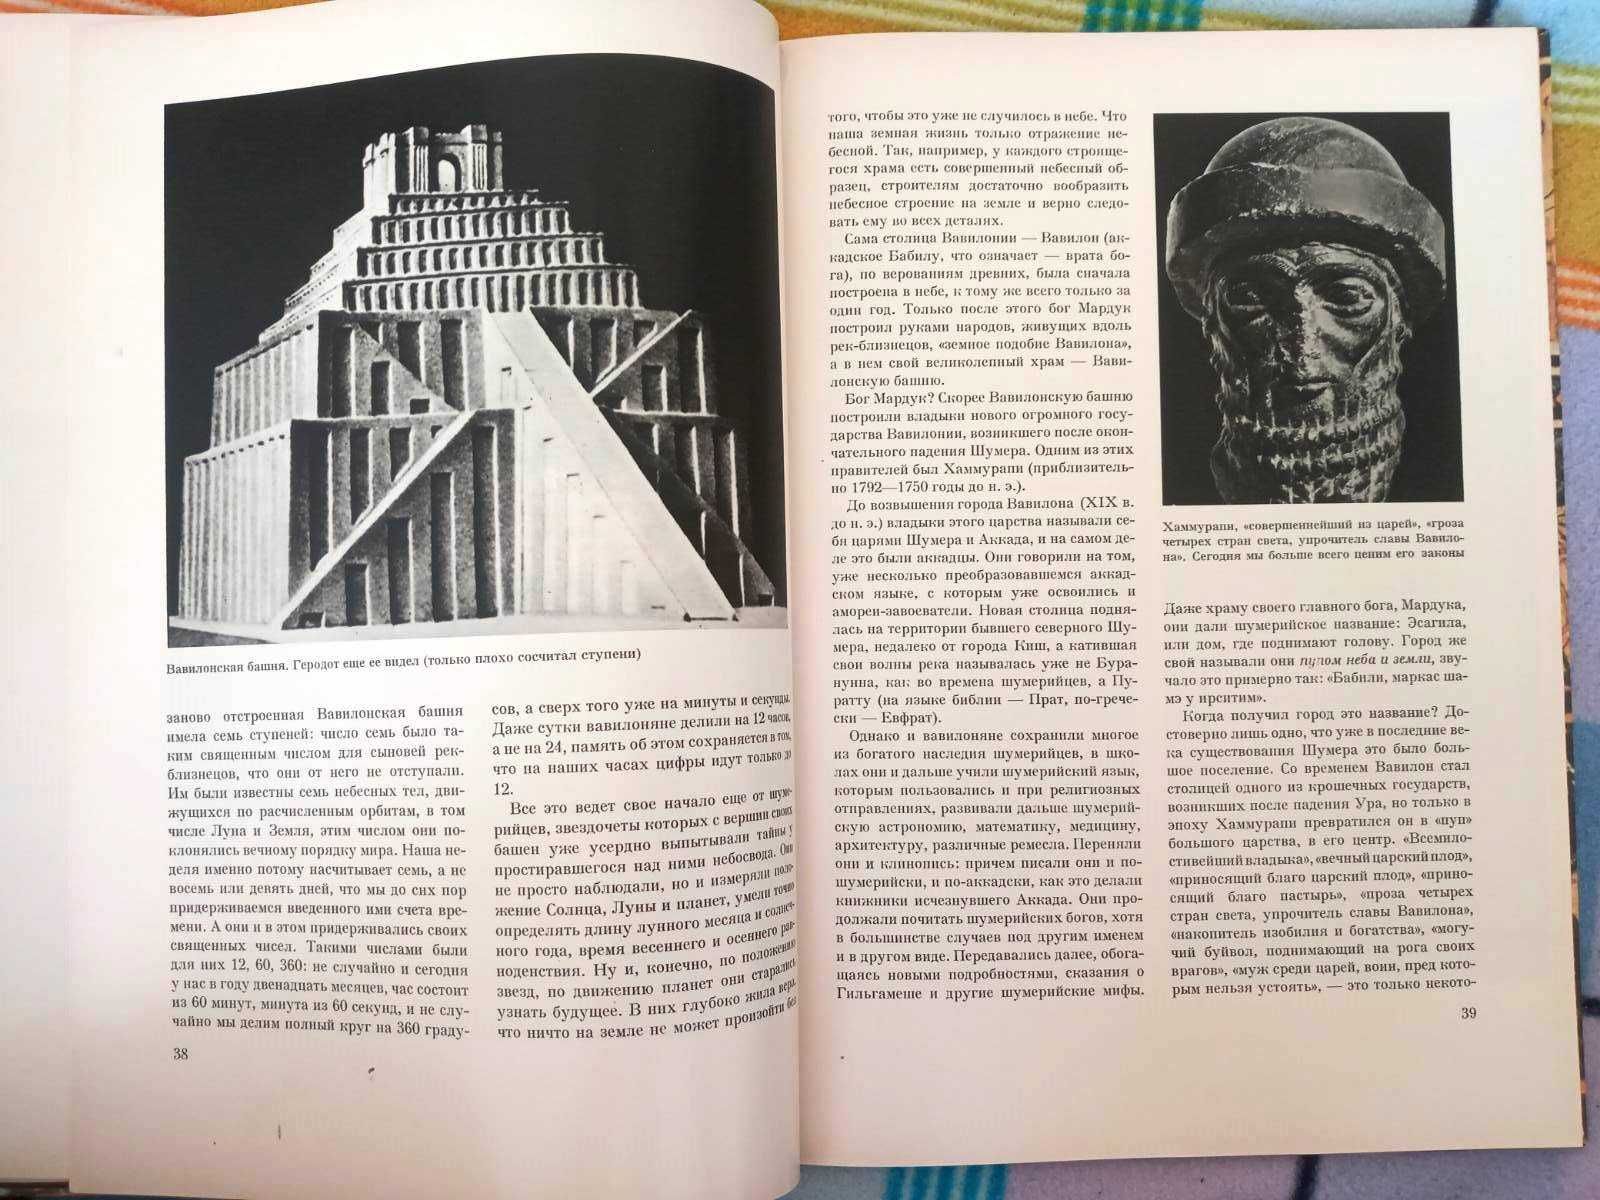 Книга "Древний восток", Домокош Варга, 1979 р.